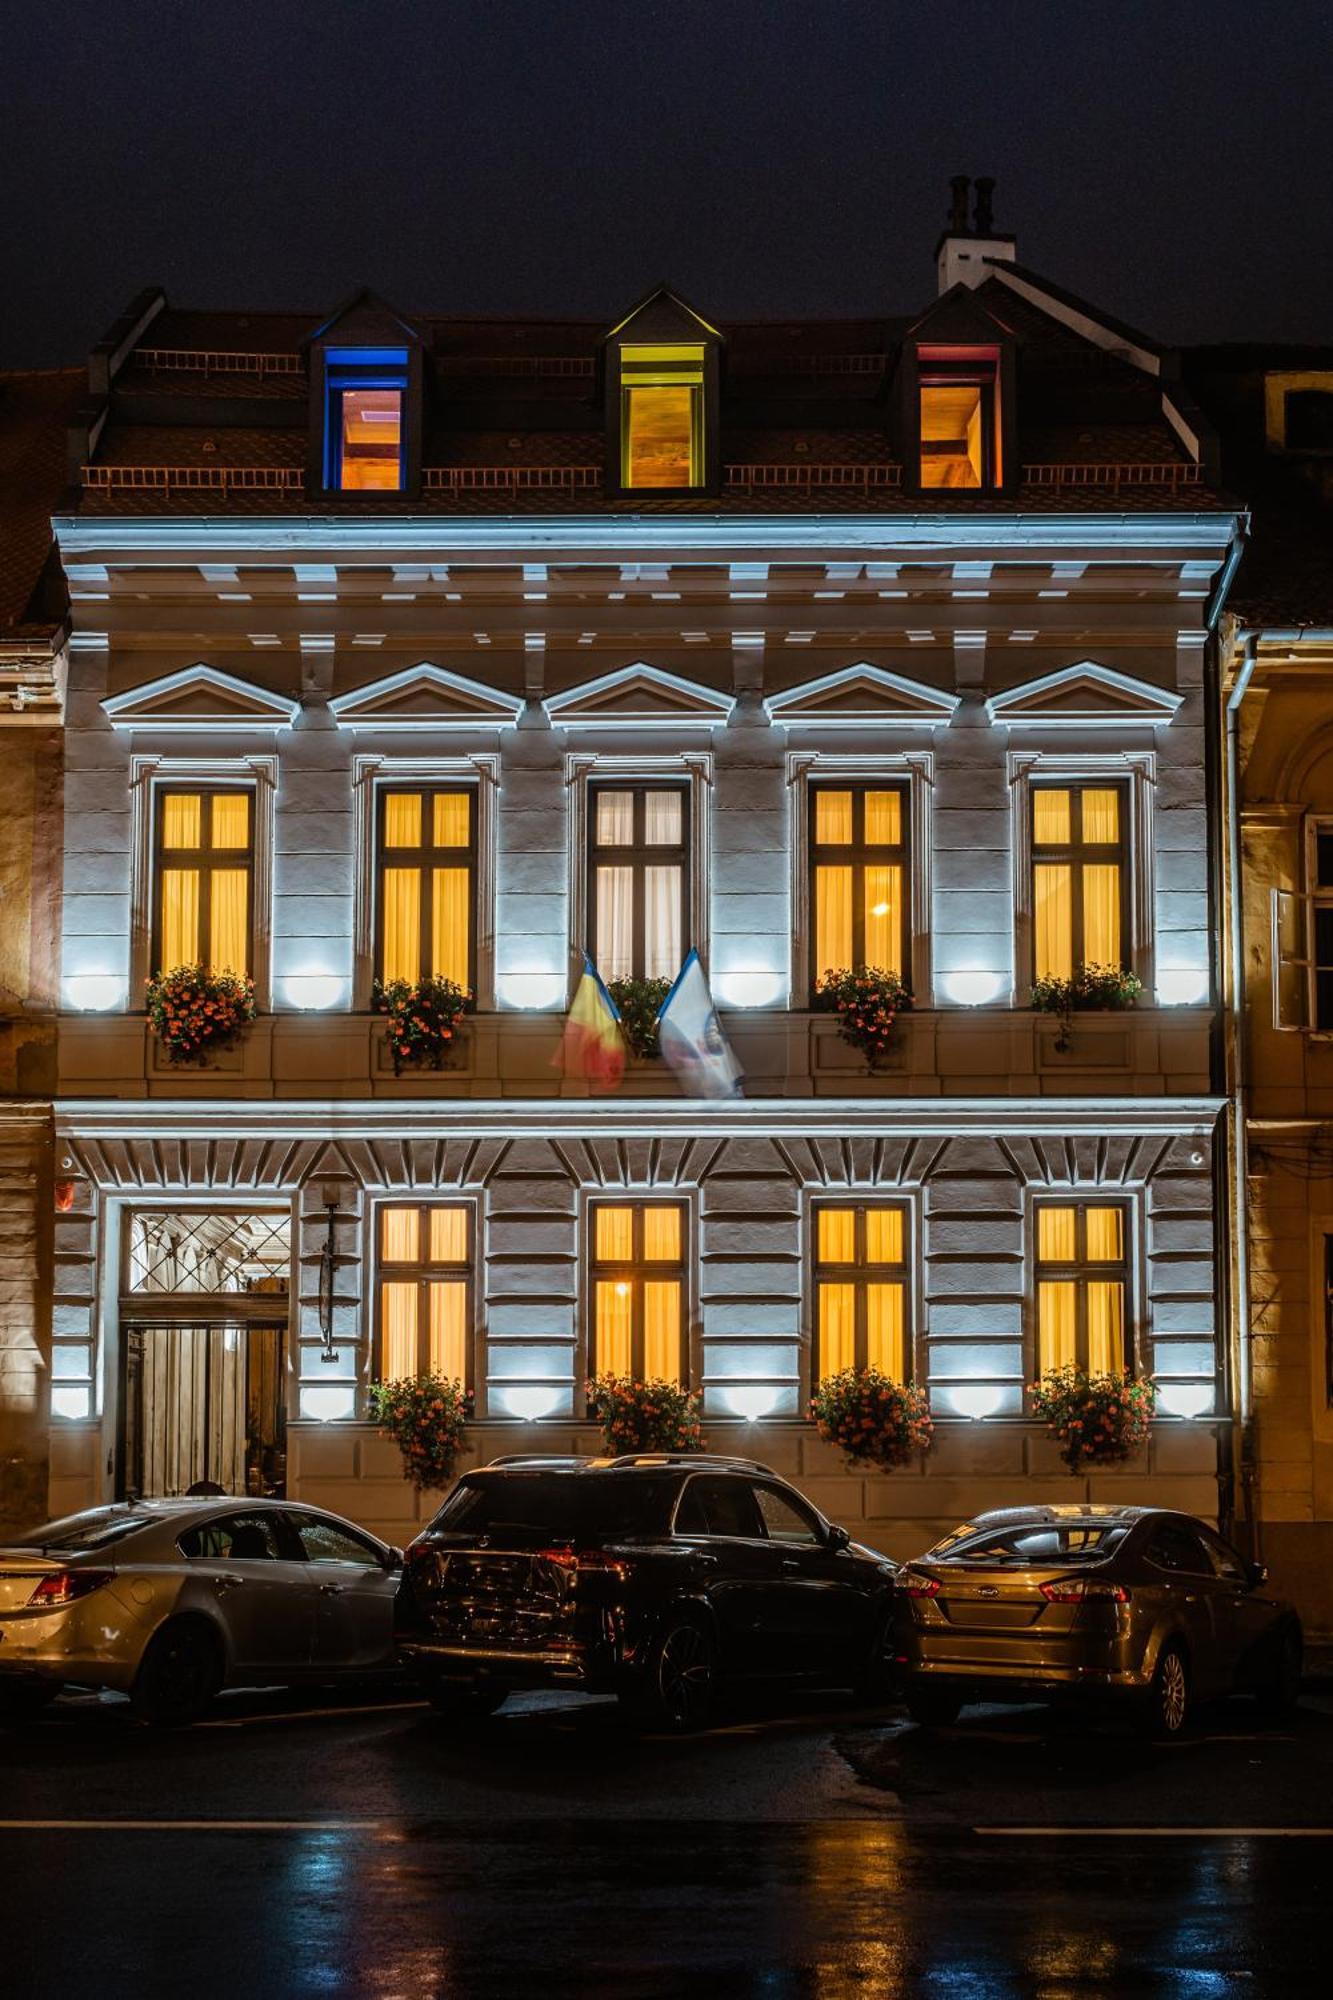 Casa Chitic - Hotel & Restaurant- Str Nicolae Balcescu 13 Braşov Exterior foto